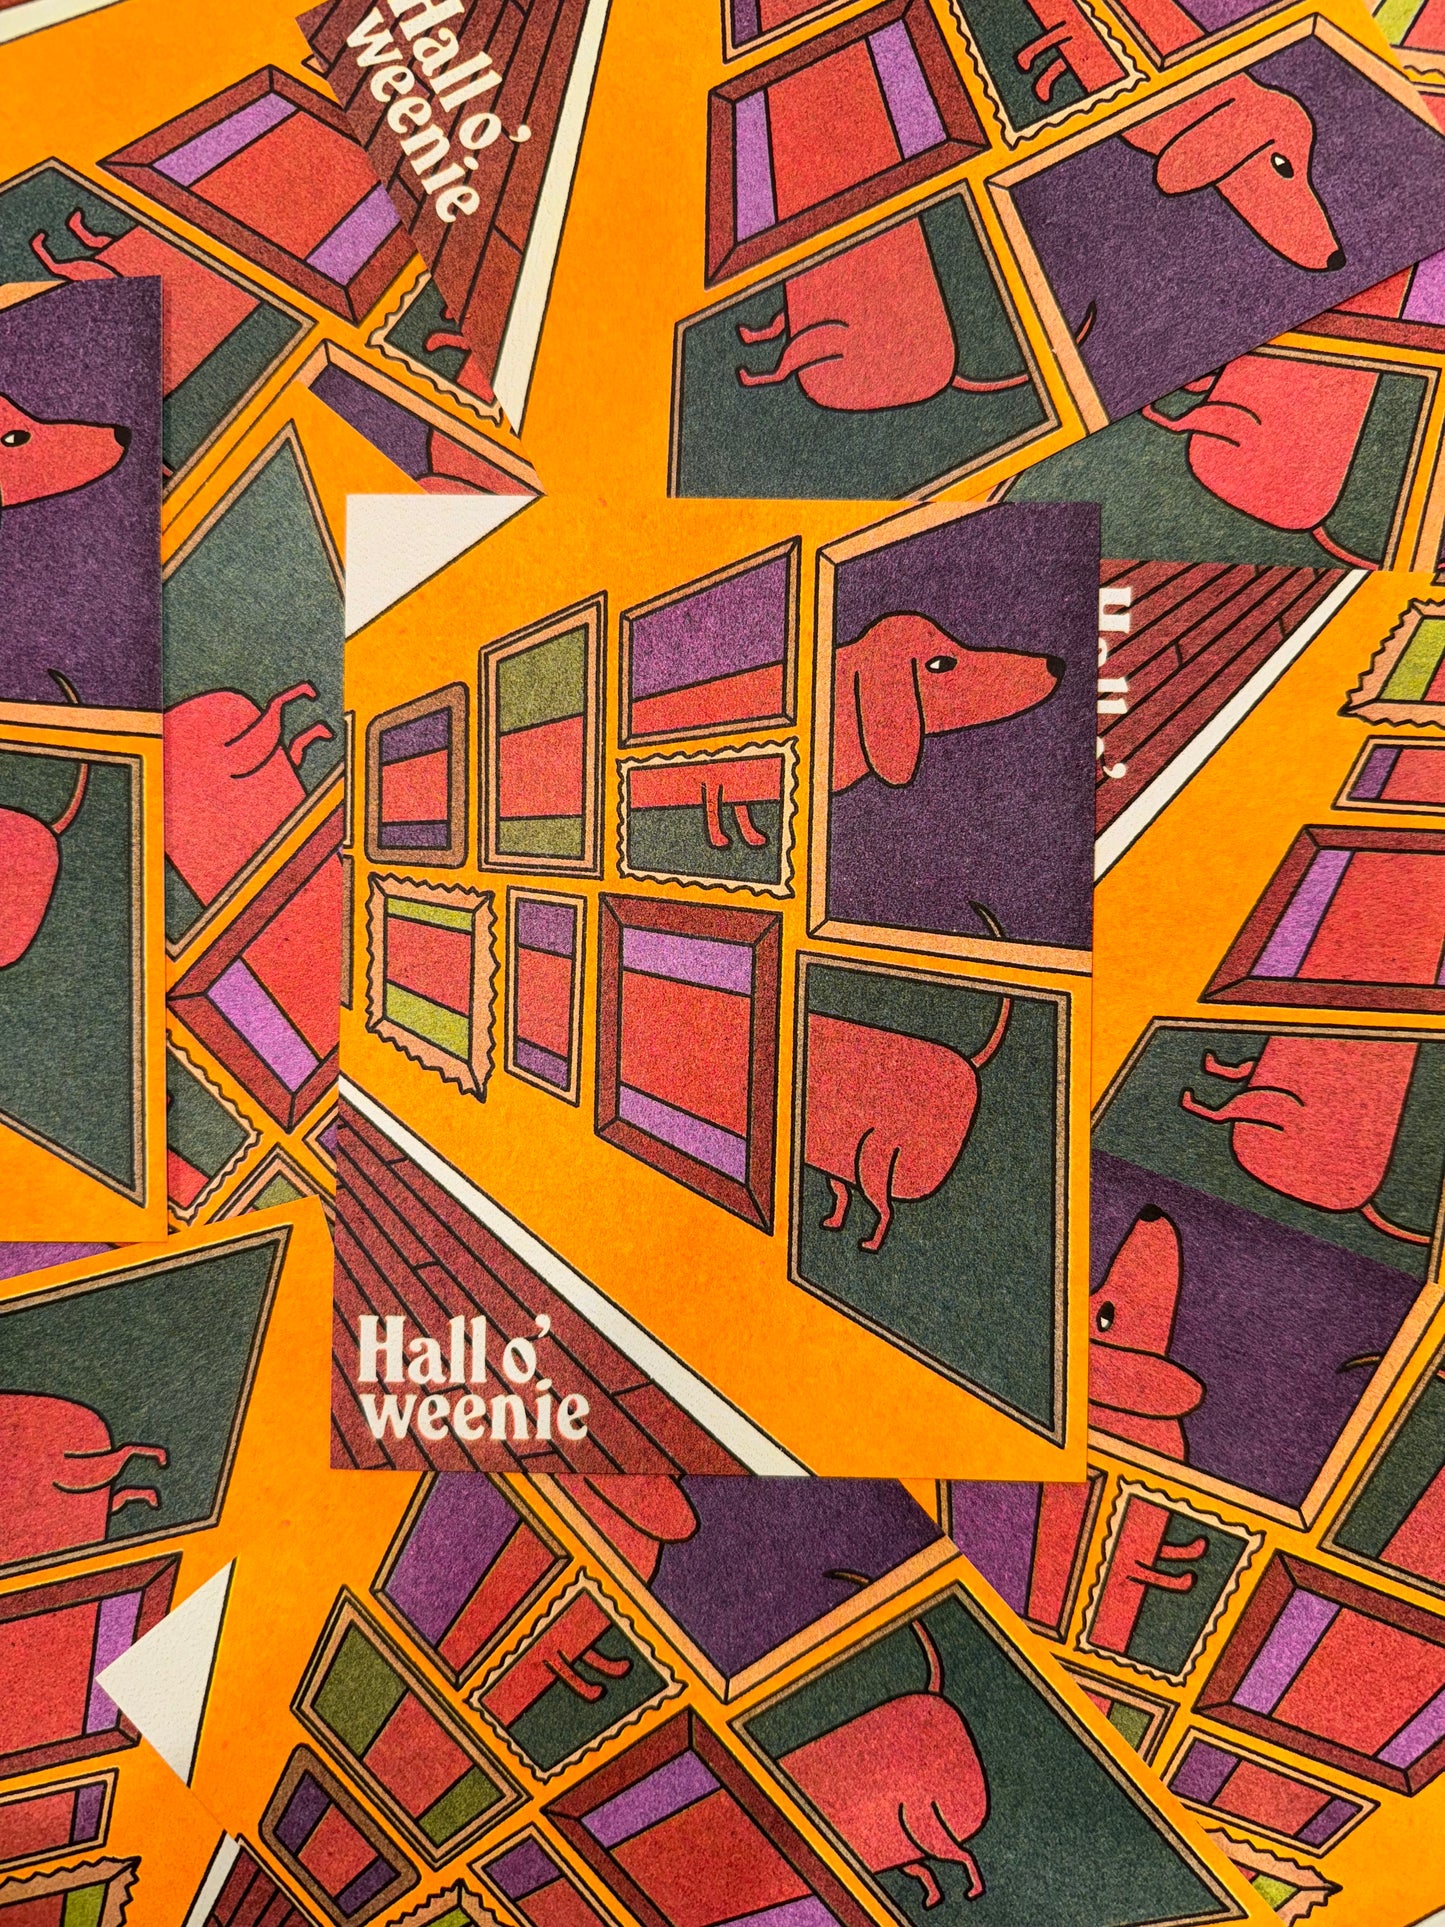 Hall o' Weenie (Postcard)